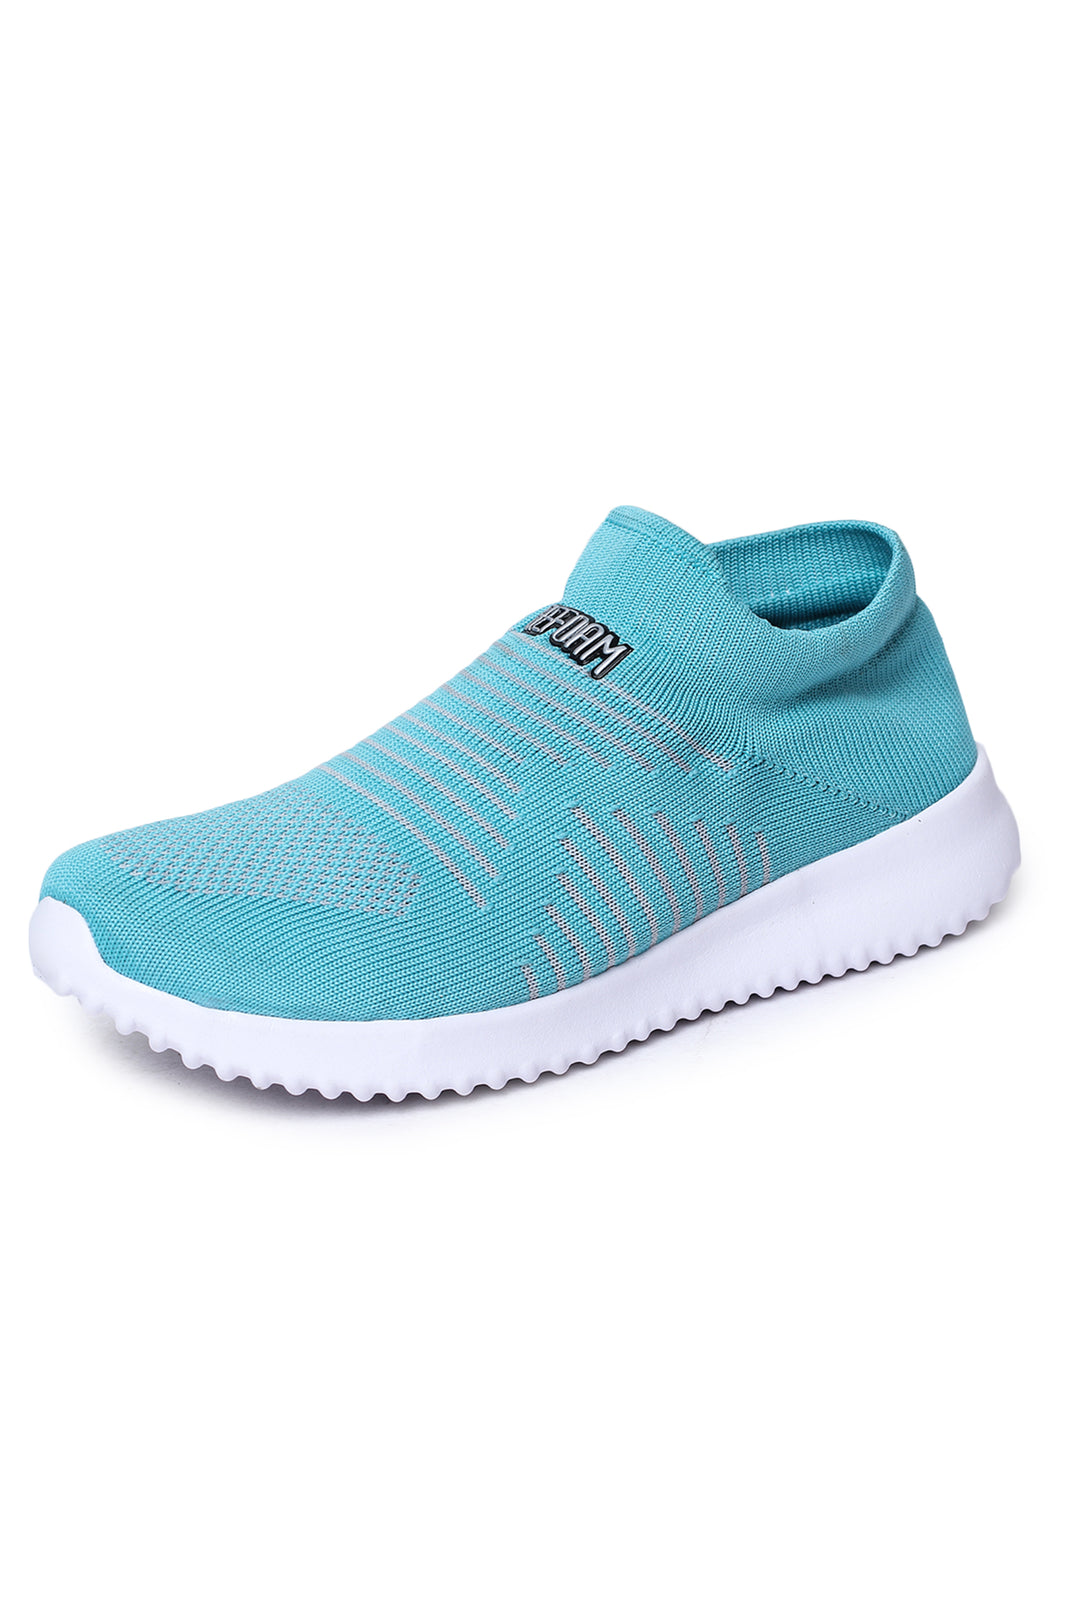 Blue Solid Mesh Slip On Running Sport Shoes For Women